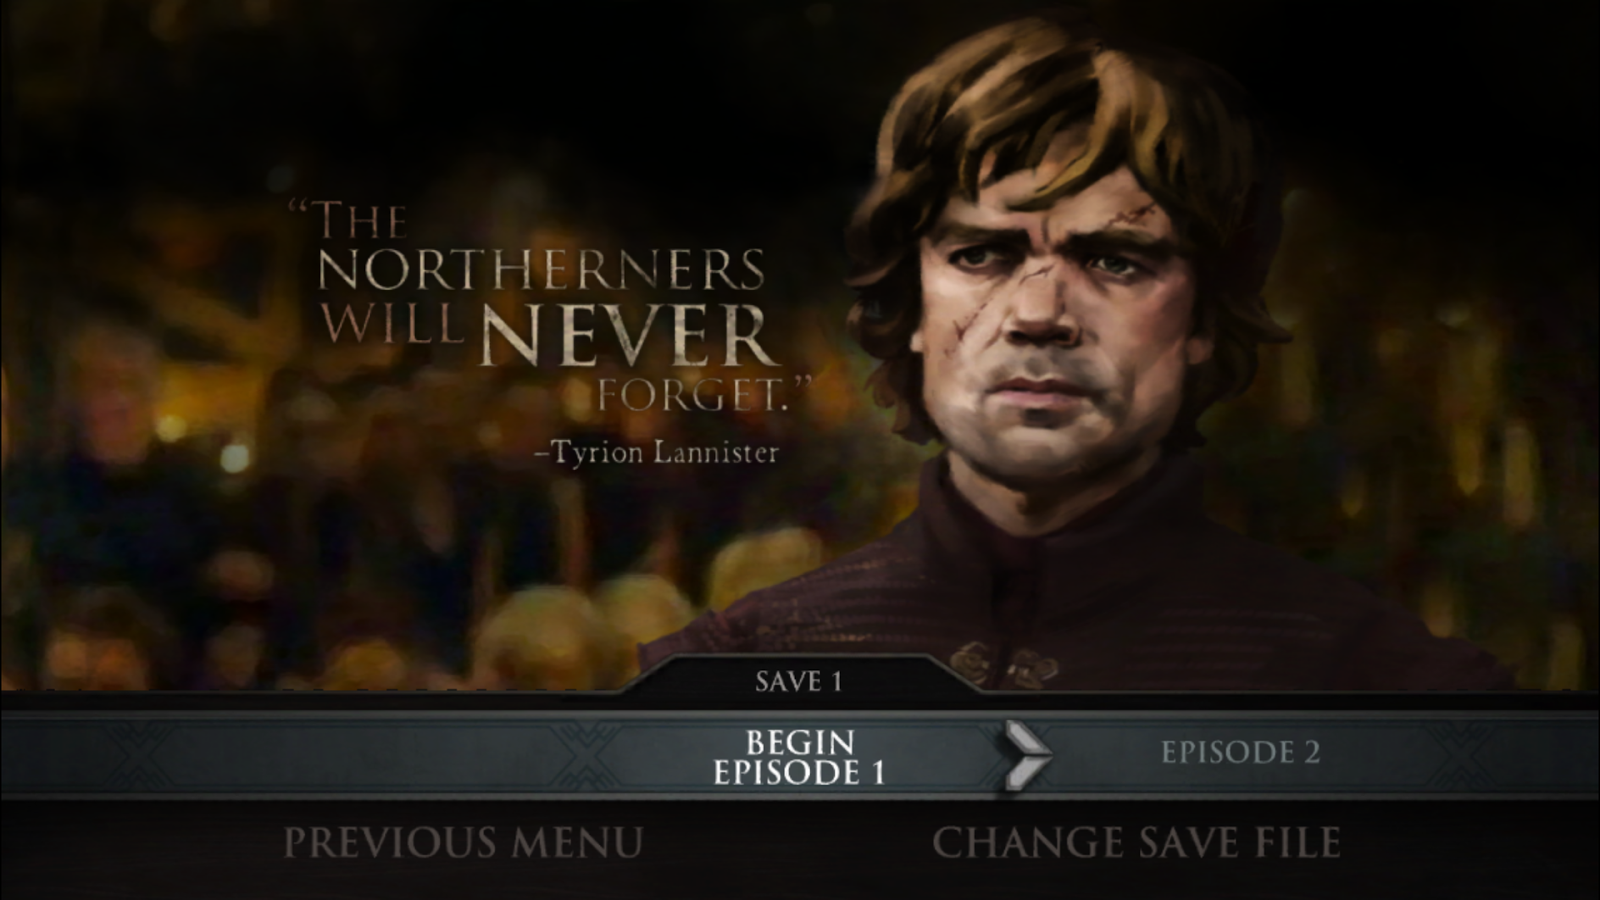 Download Game Of Thrones Season 2 Episode 1 Free